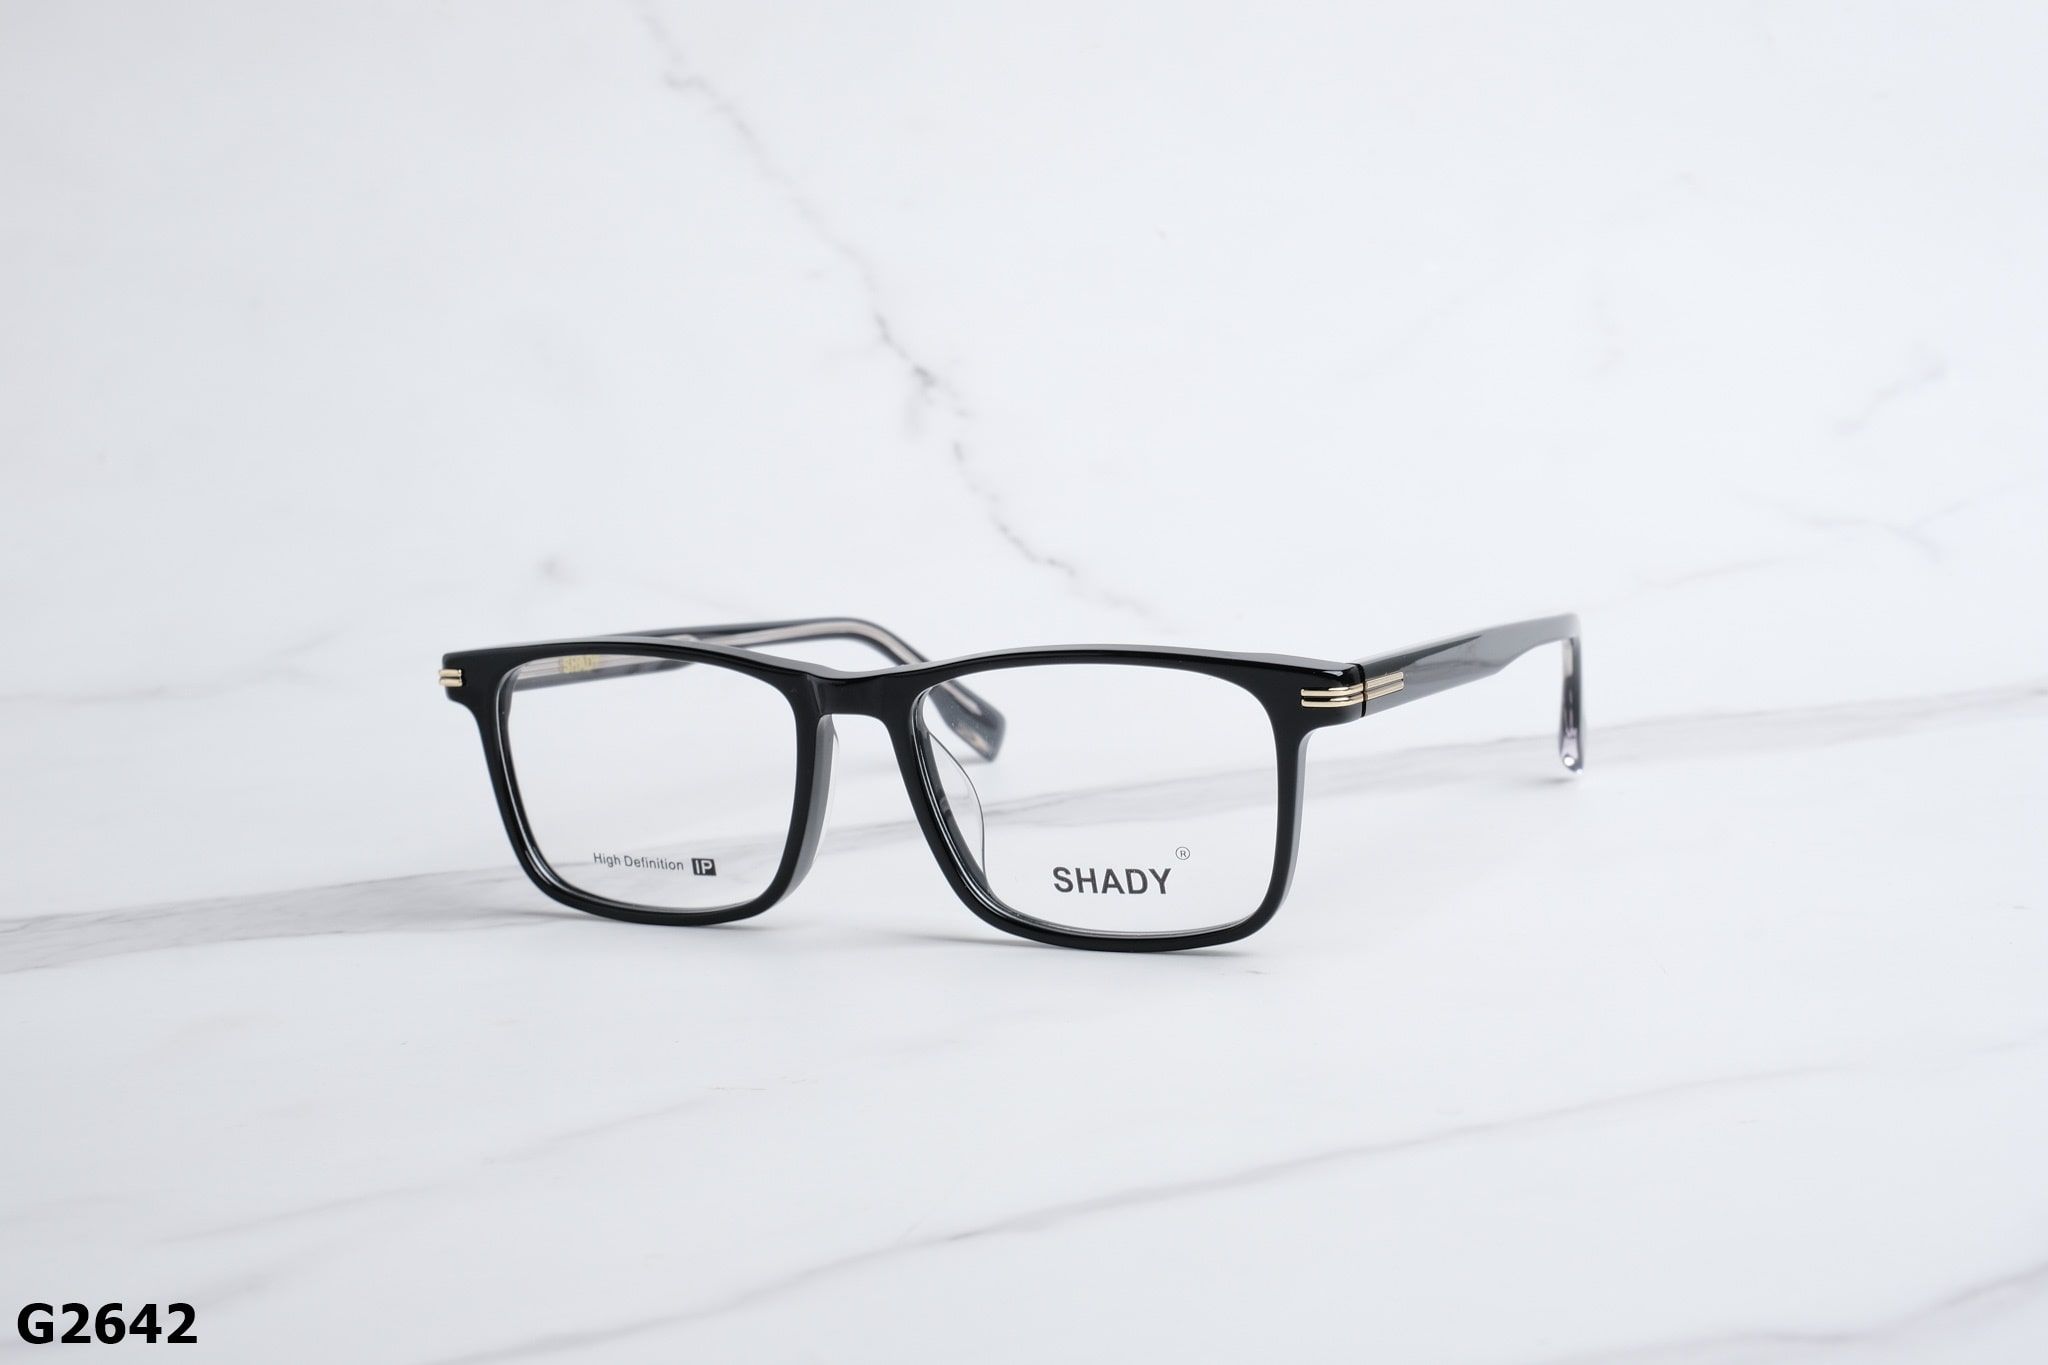  SHADY Eyewear - Glasses - G2642 